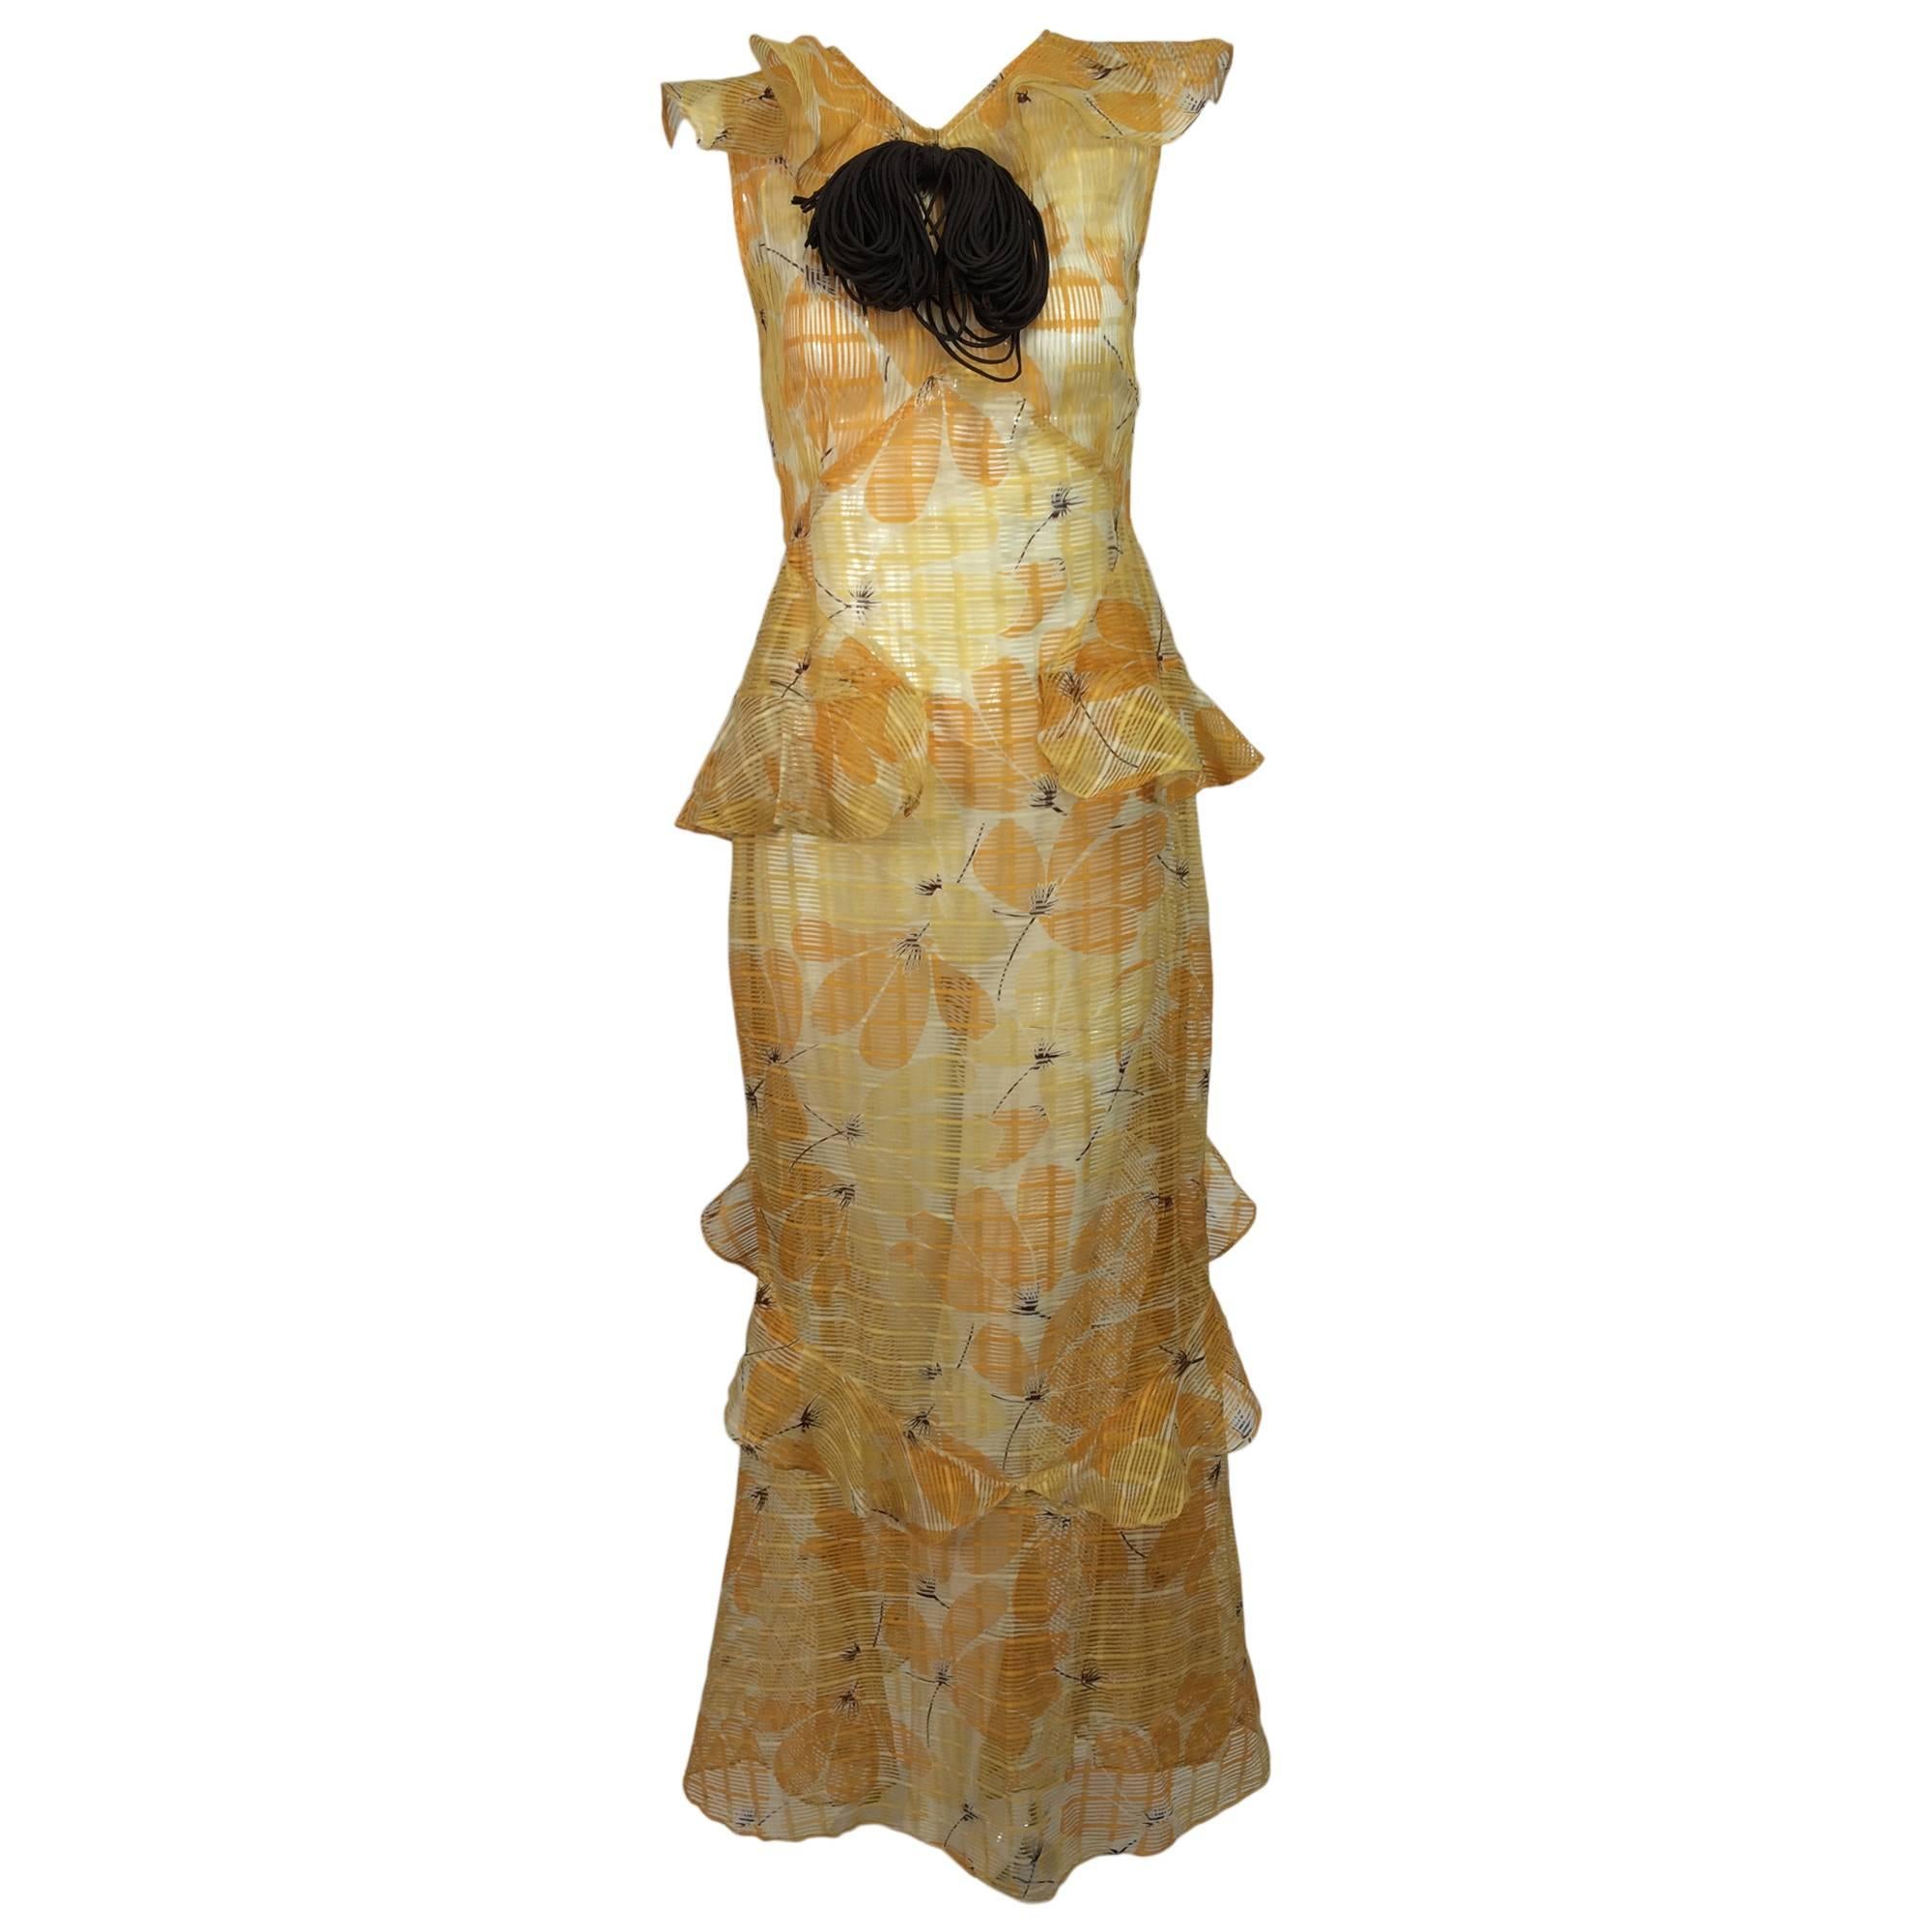 Sheer Woven Organdy ruffle daydress in floral cream & orange 1930s unworn